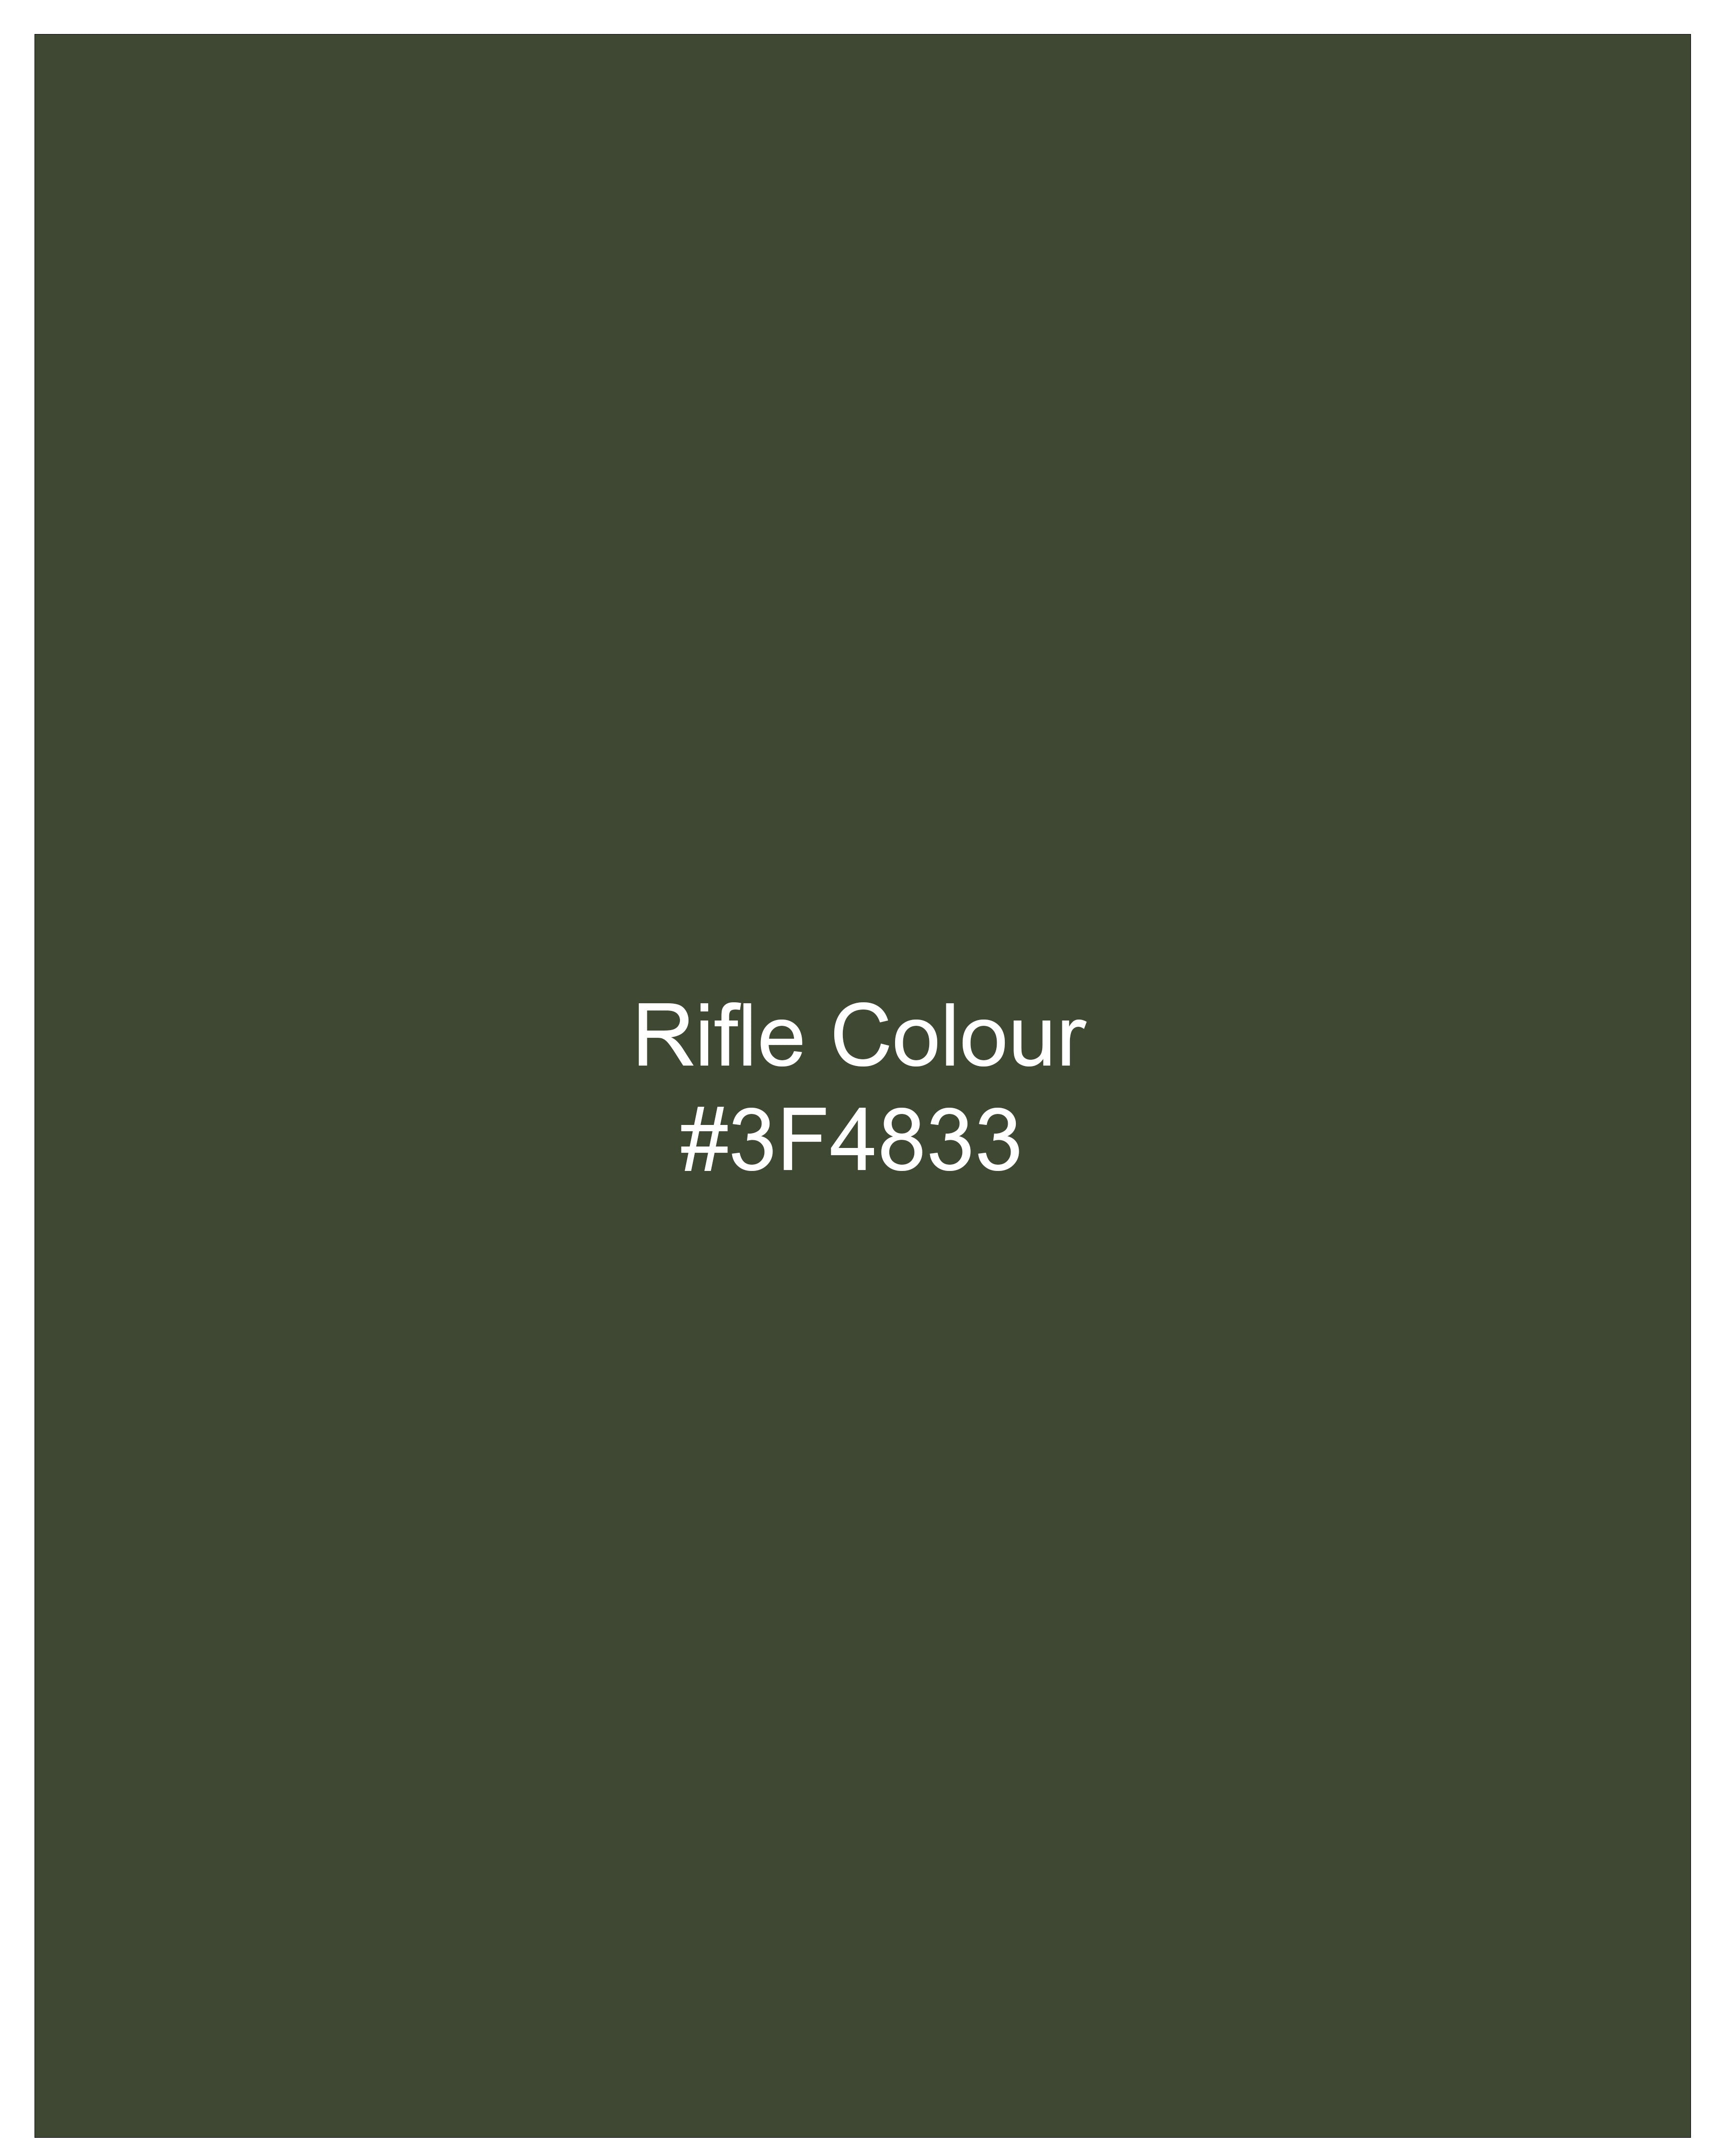 Rifle Green Premium Cotton Pant T2323-28, T2323-30, T2323-32, T2323-34, T2323-36, T2323-38, T2323-40, T2323-42, T2323-44